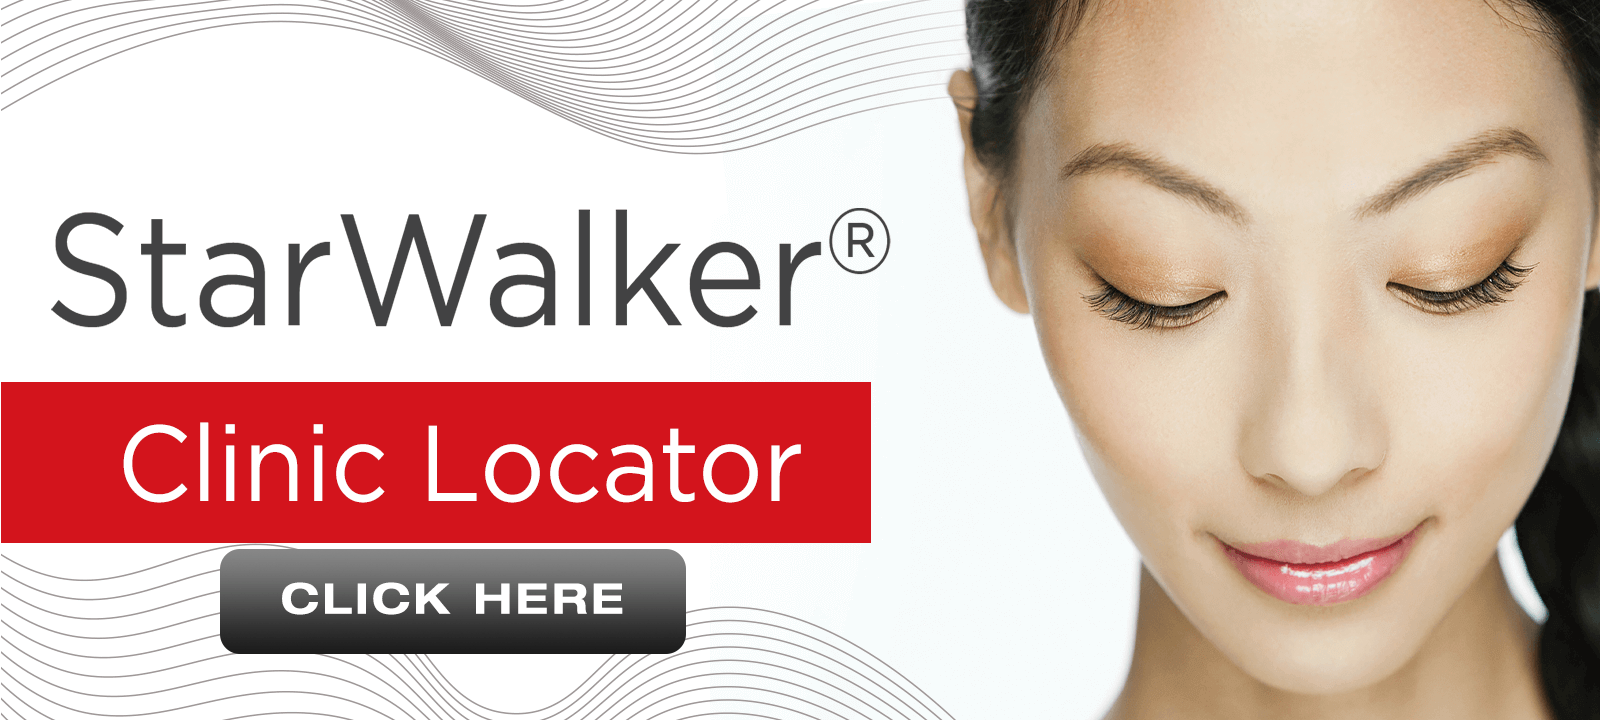 StarWalker Clinic Locator